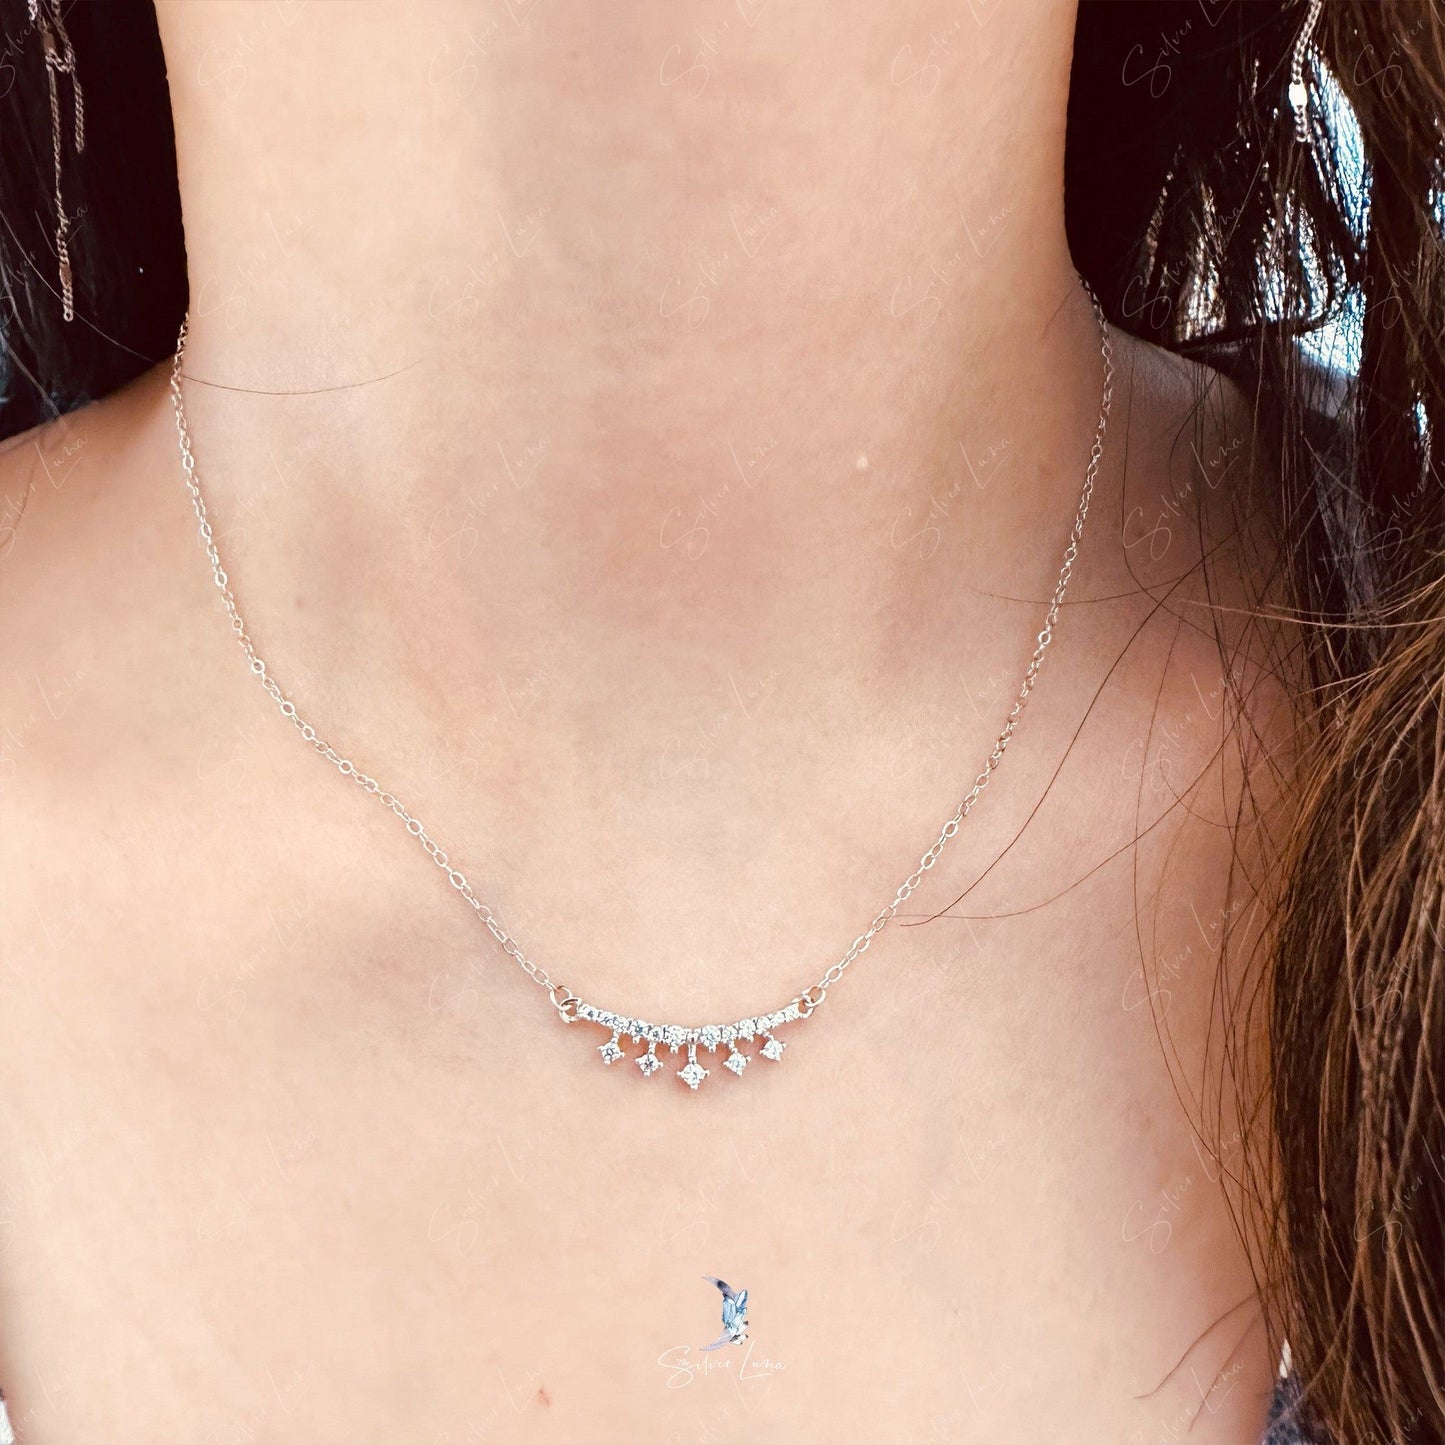 Dainty tiara pendant necklace